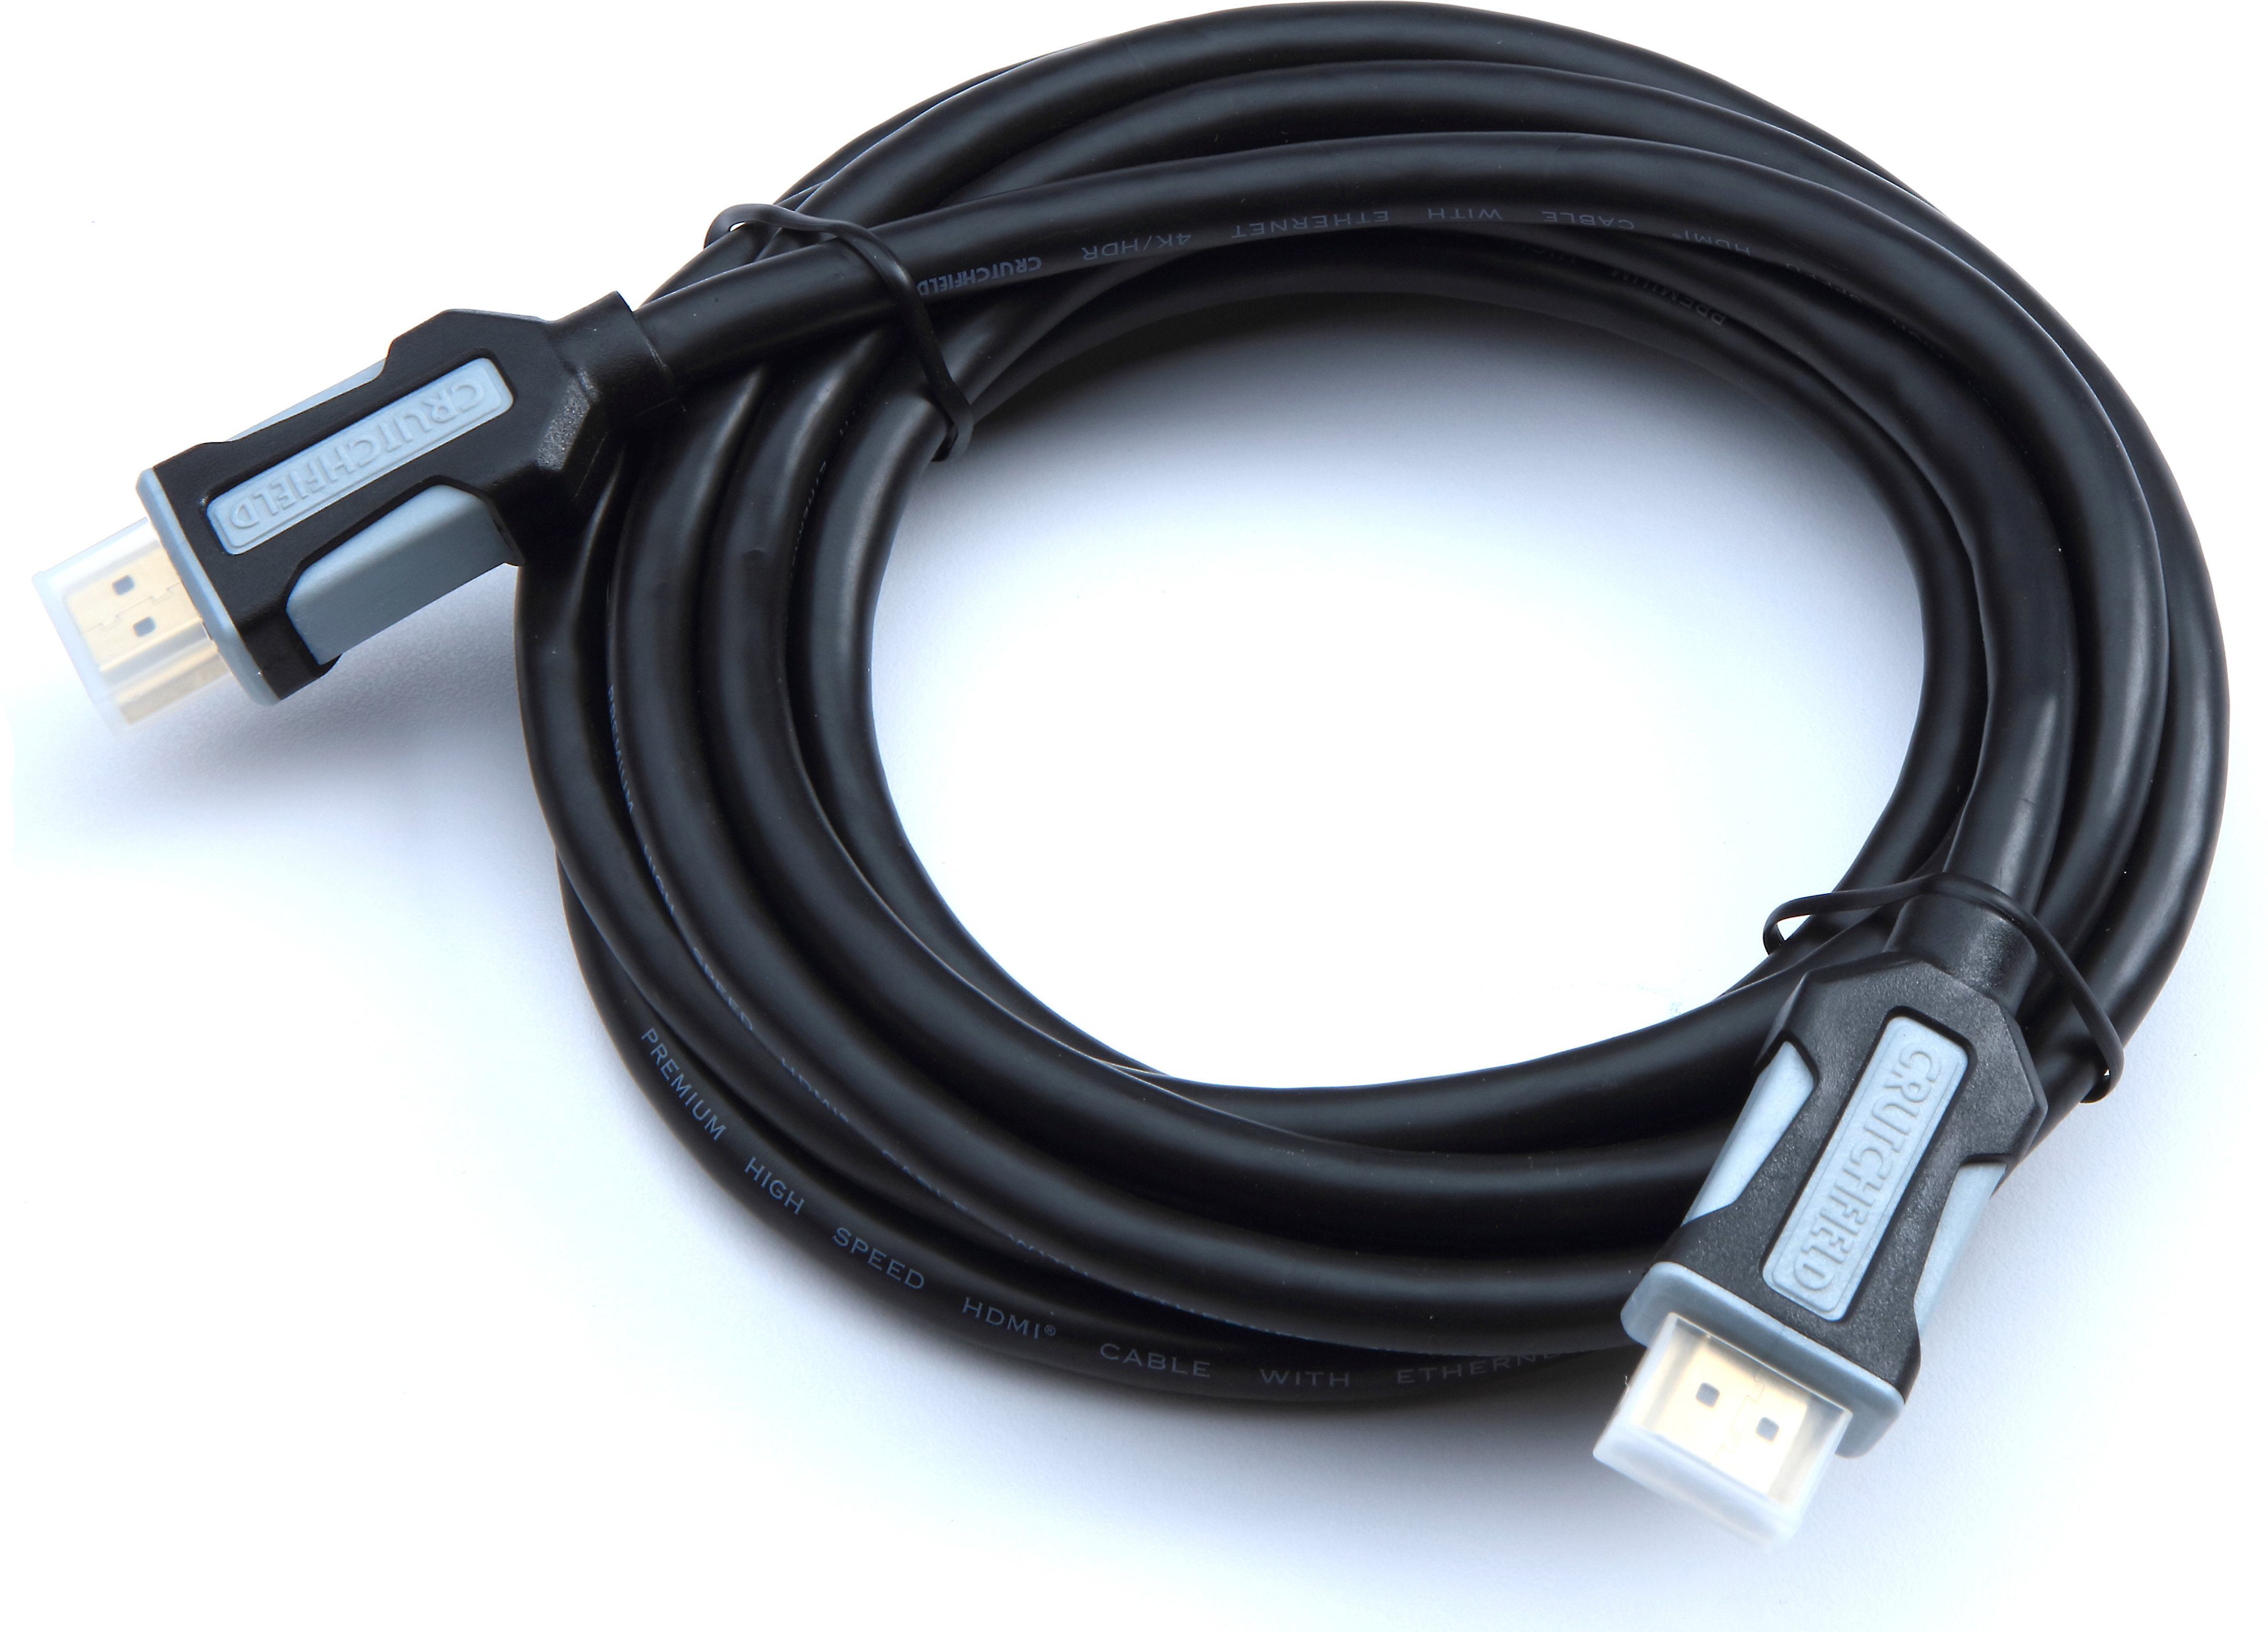 Crutchfield Premium Hdmi Cable 10 Feet Premium High Speed Hdmi Cable With Ethernet At Crutchfield